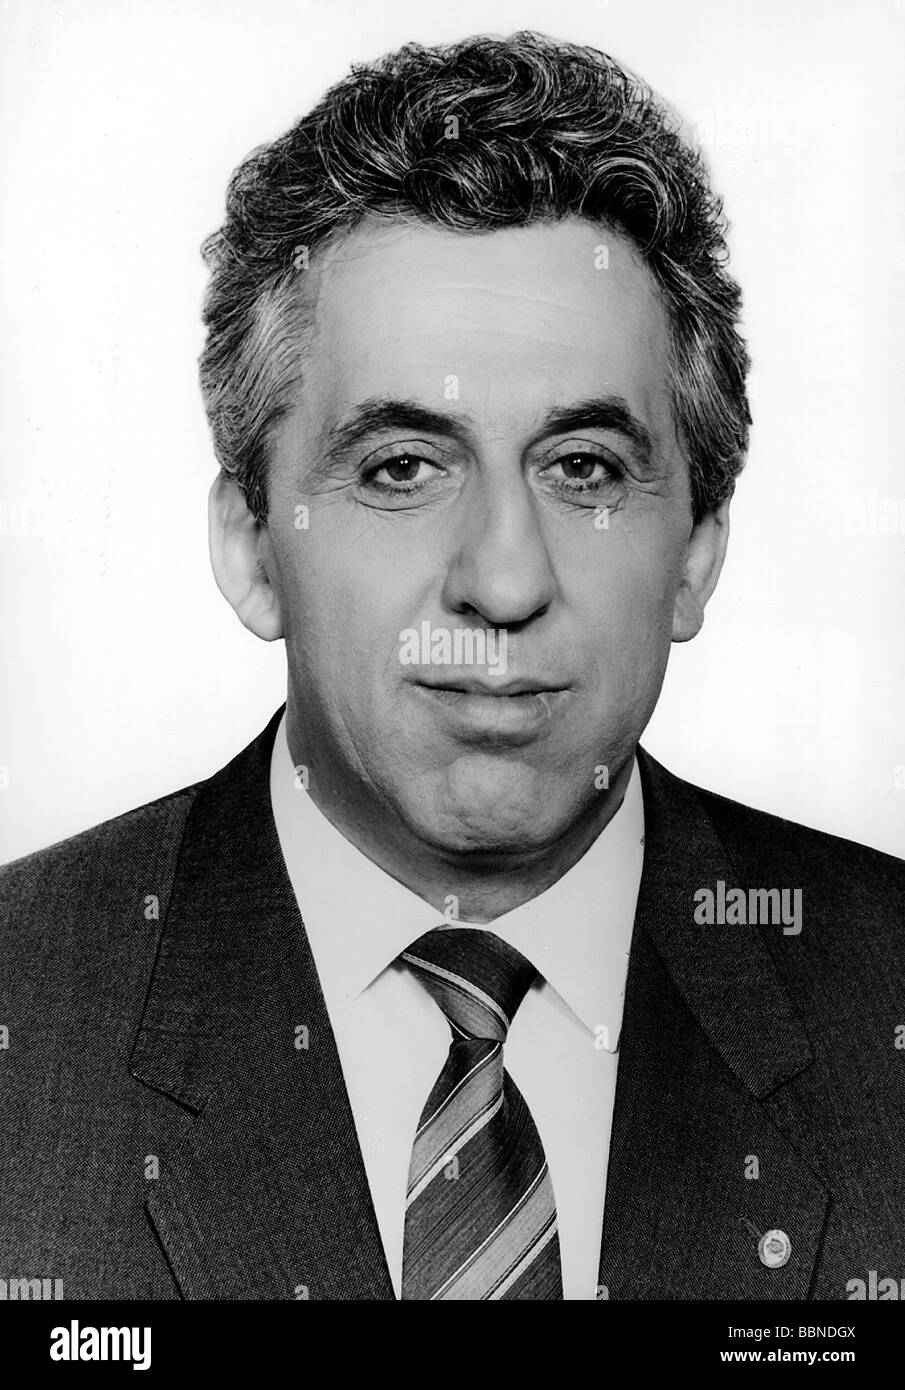 Krenz, Egon, * 19.3.1937, German politician (SED), Council of the German Democratic Republic (October to December 1989), portrait, 5.6.1984, Stock Photo